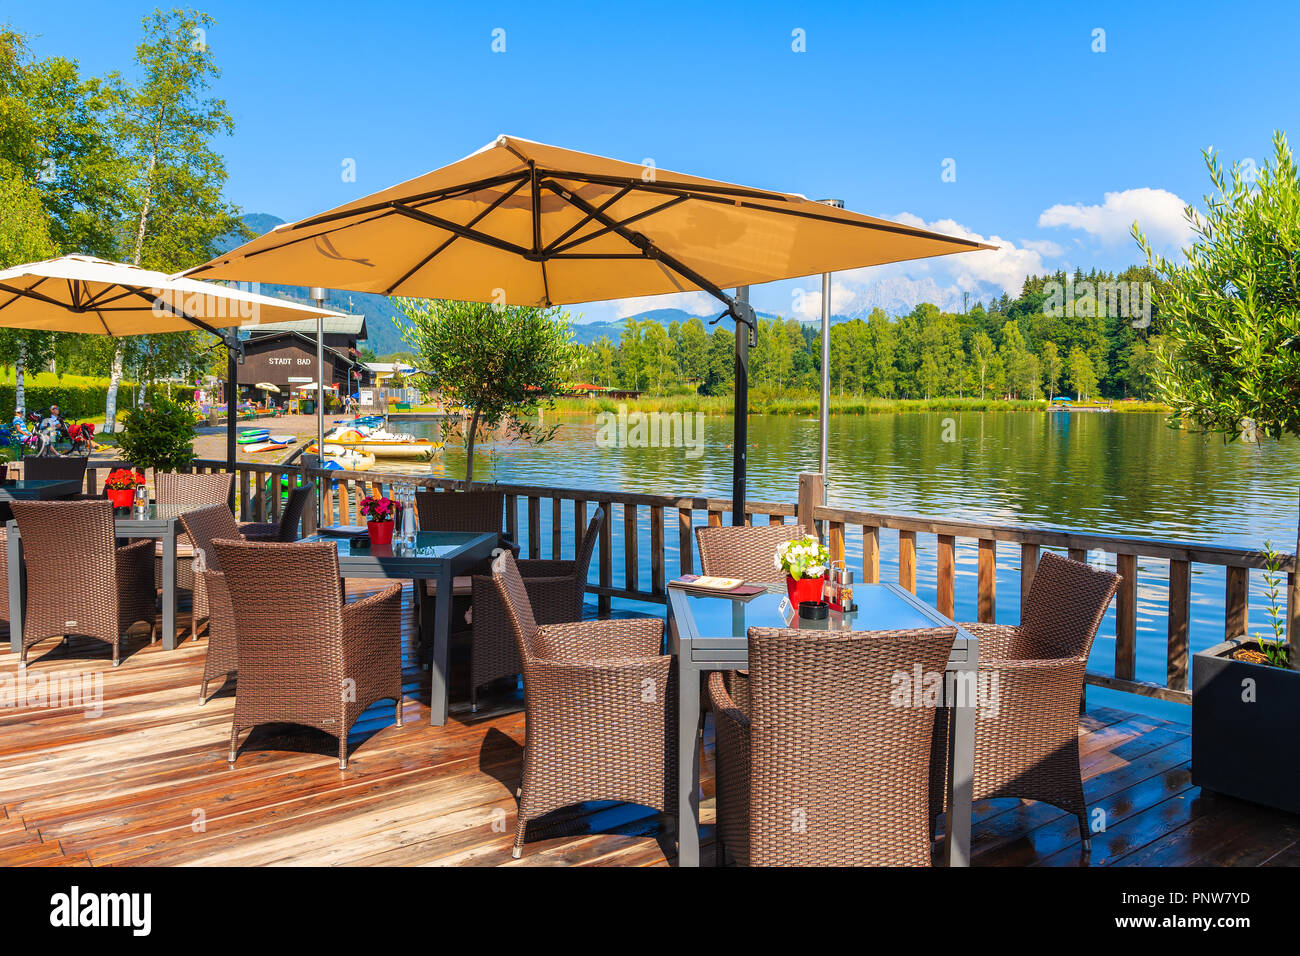 SCHWARZSEE LAKE, TIROL - AUG 3, 2018: Restaurant on promenade on shore of Schwarzsee lake near Kitzbuhel town on beautiful summer day, Austria. This p Stock Photo